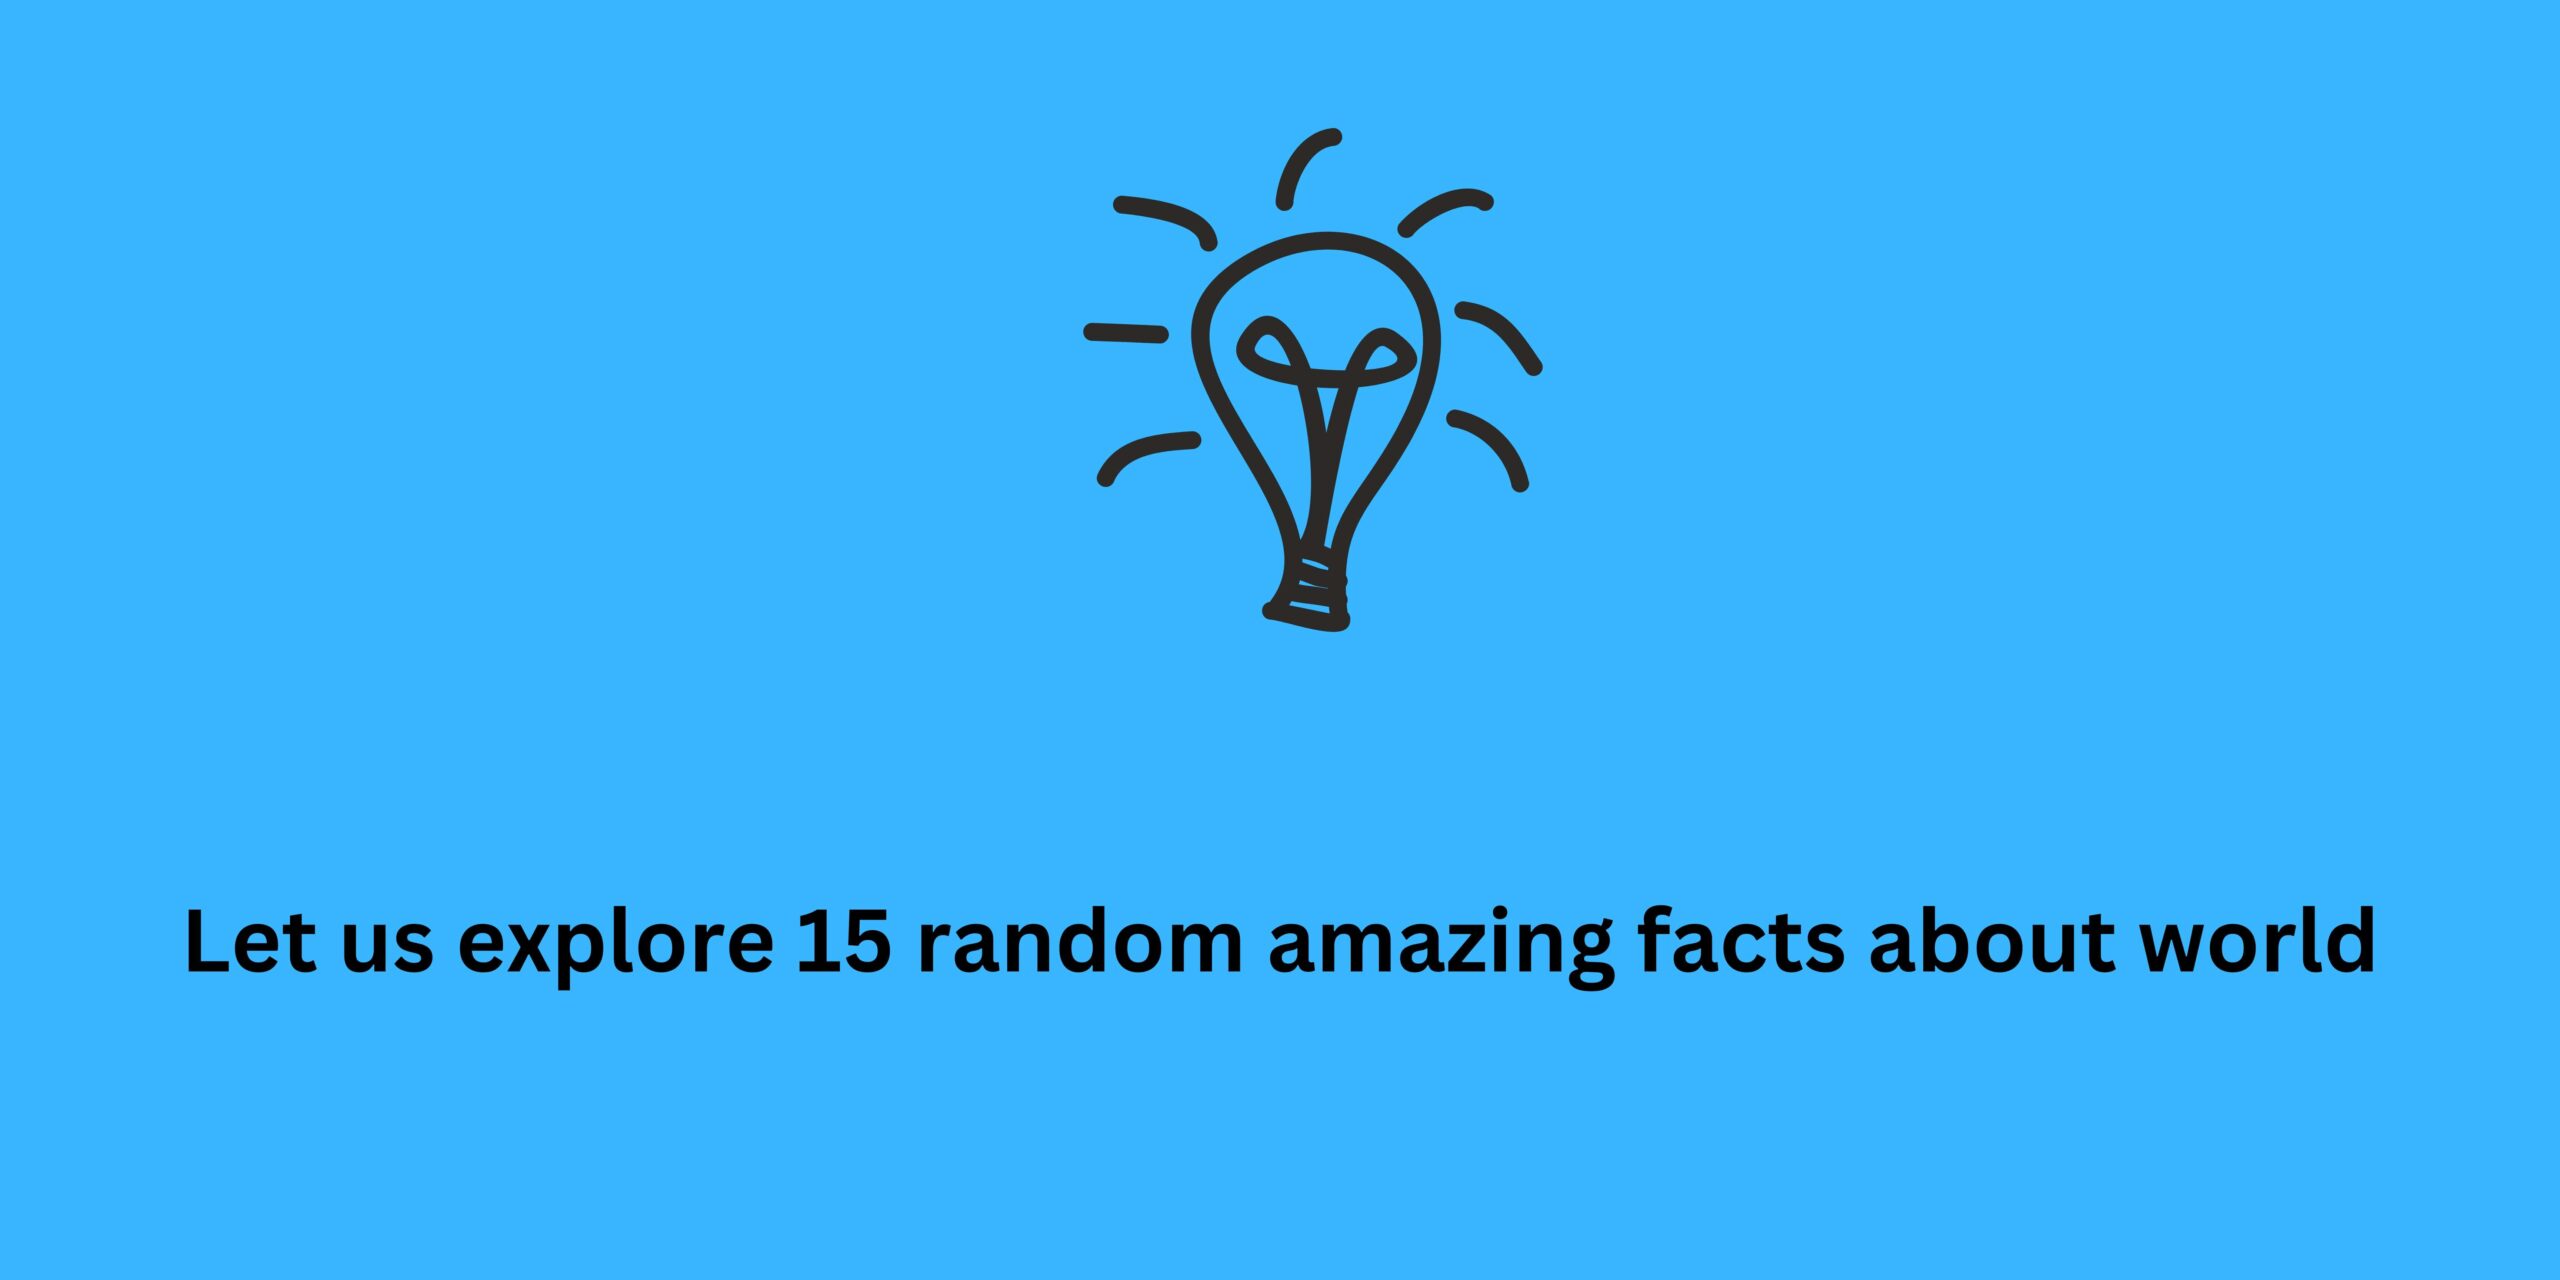 Let us explore 15 random amazing facts about world